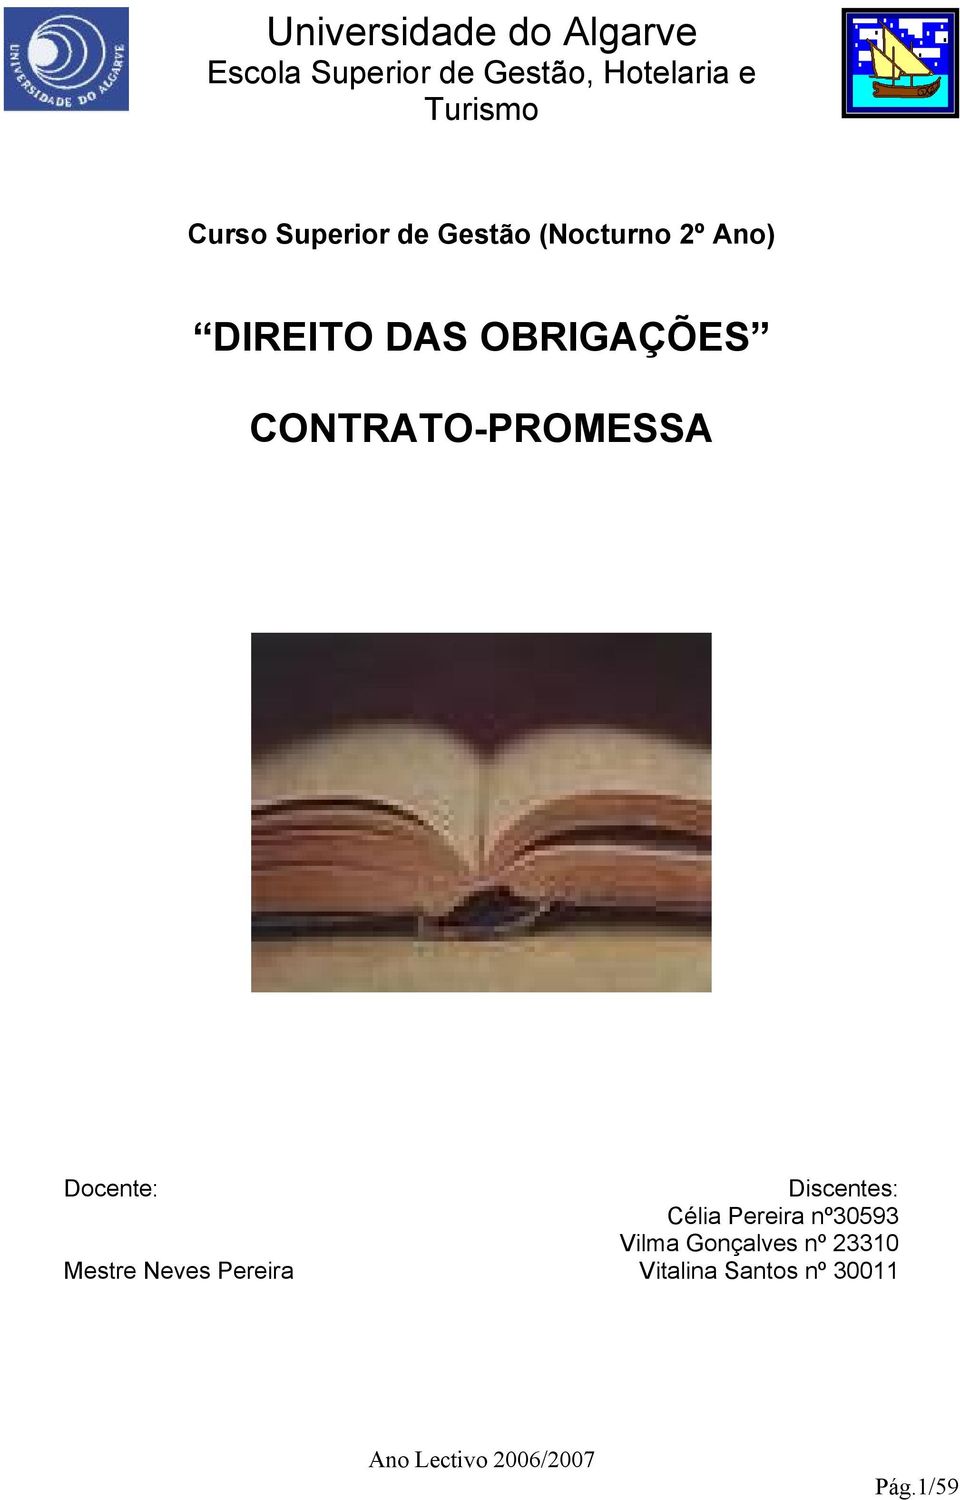 Discentes: Célia Pereira nº30593 Vilma Gonçalves nº